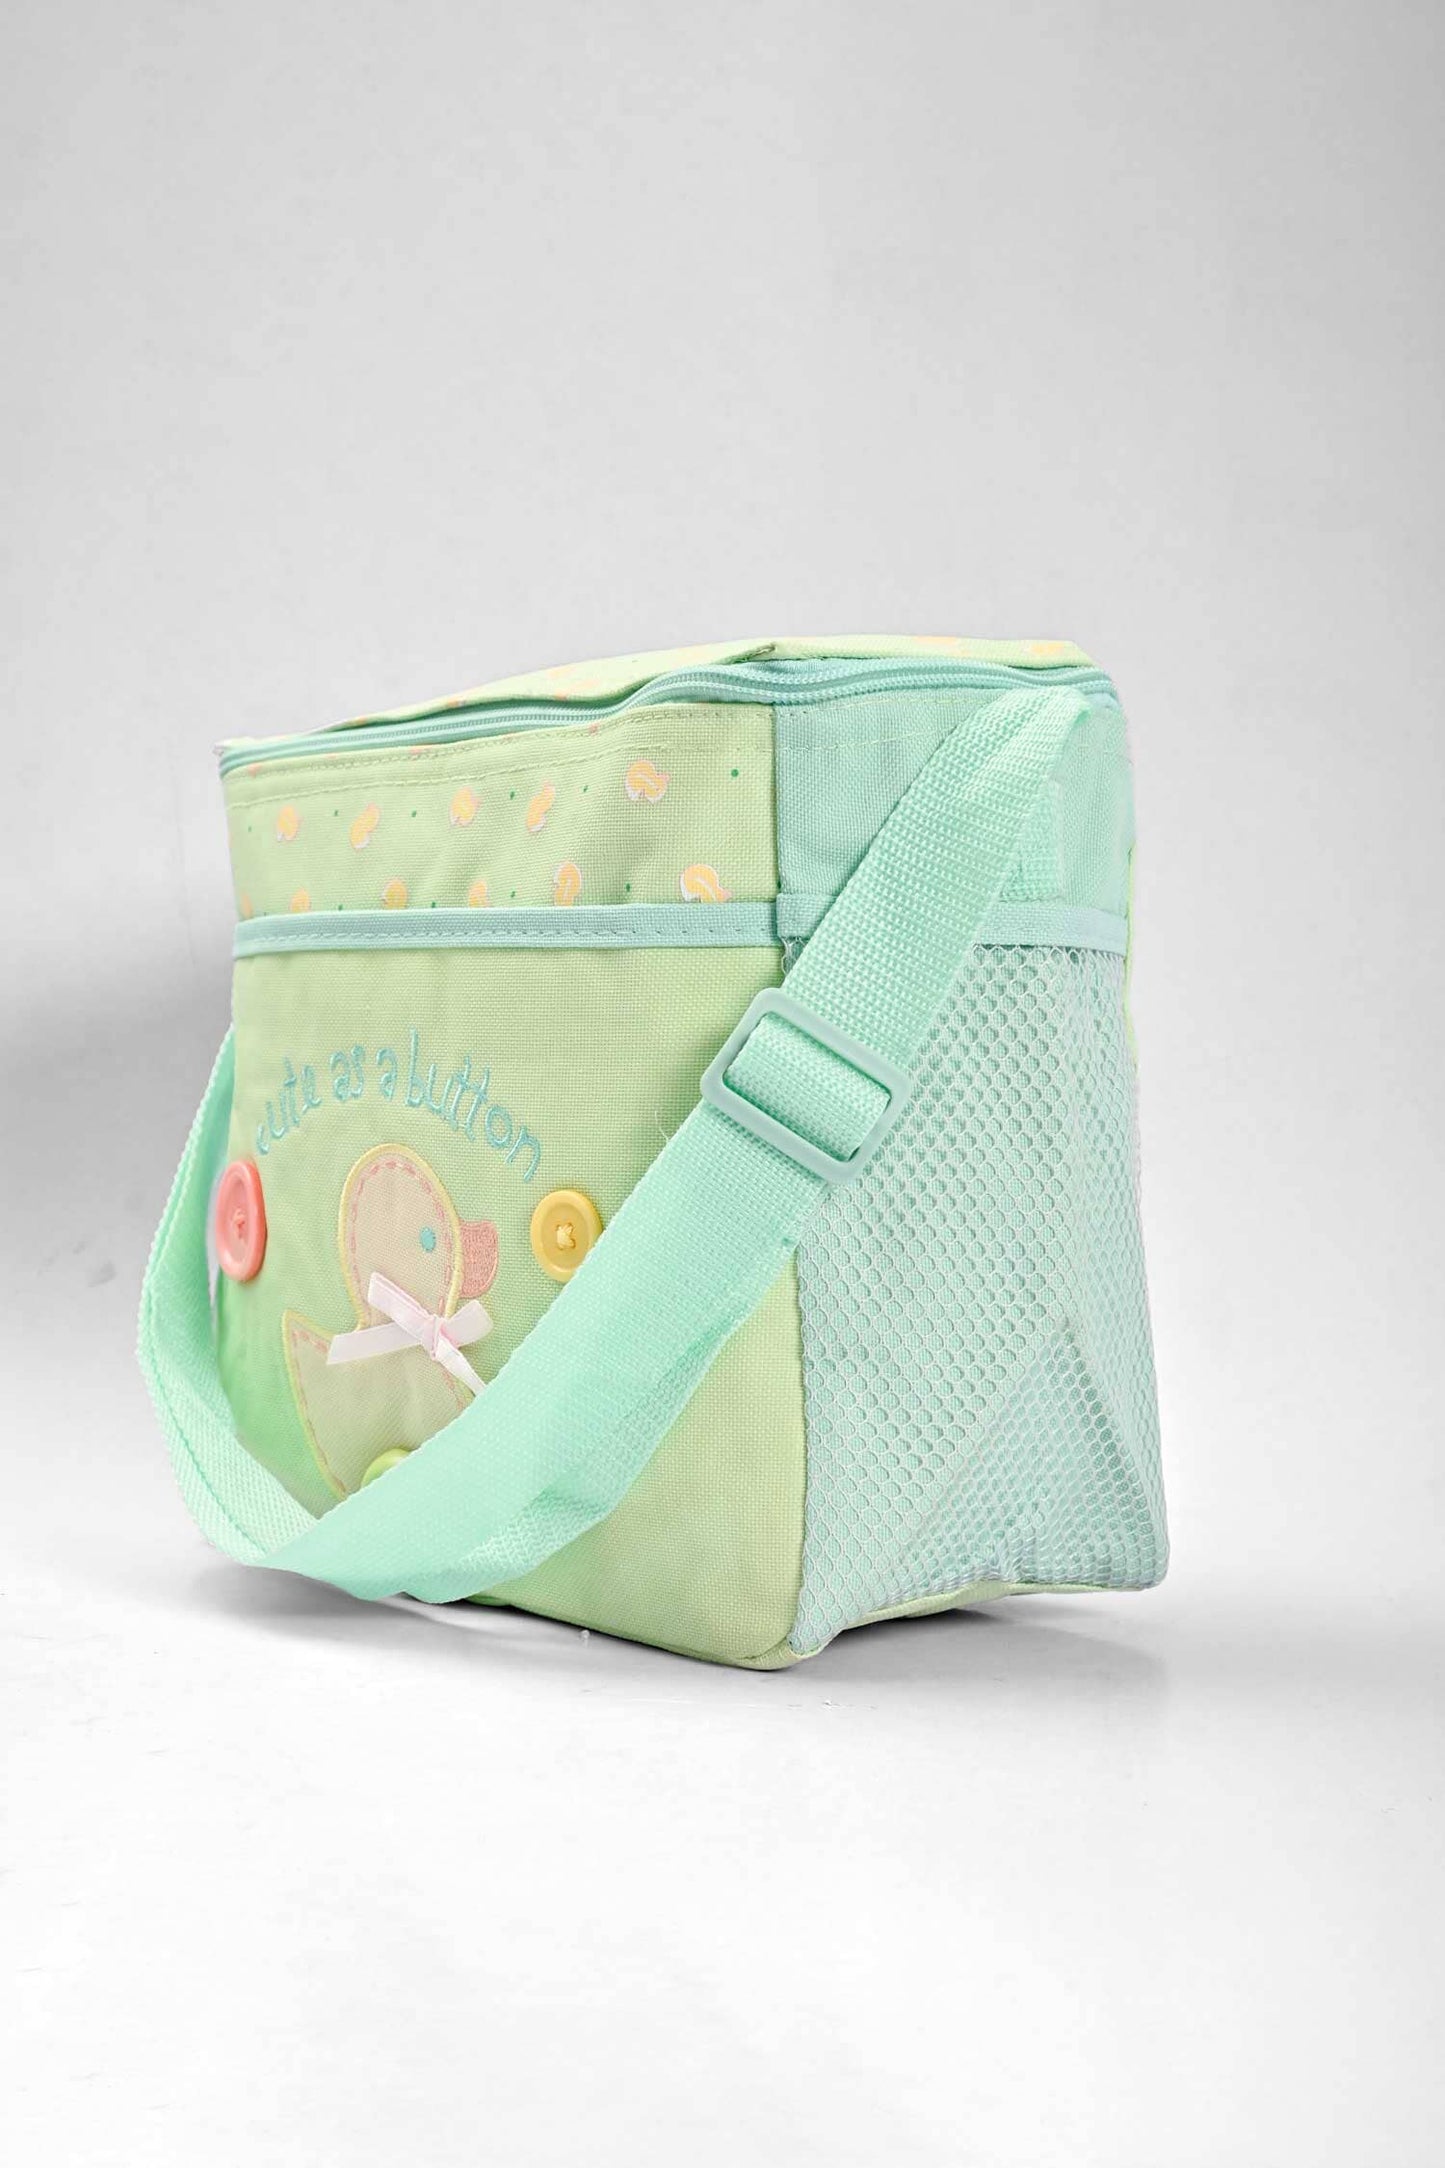 Mother's Choice Diaper Baby Bag Storage Bag RAM 